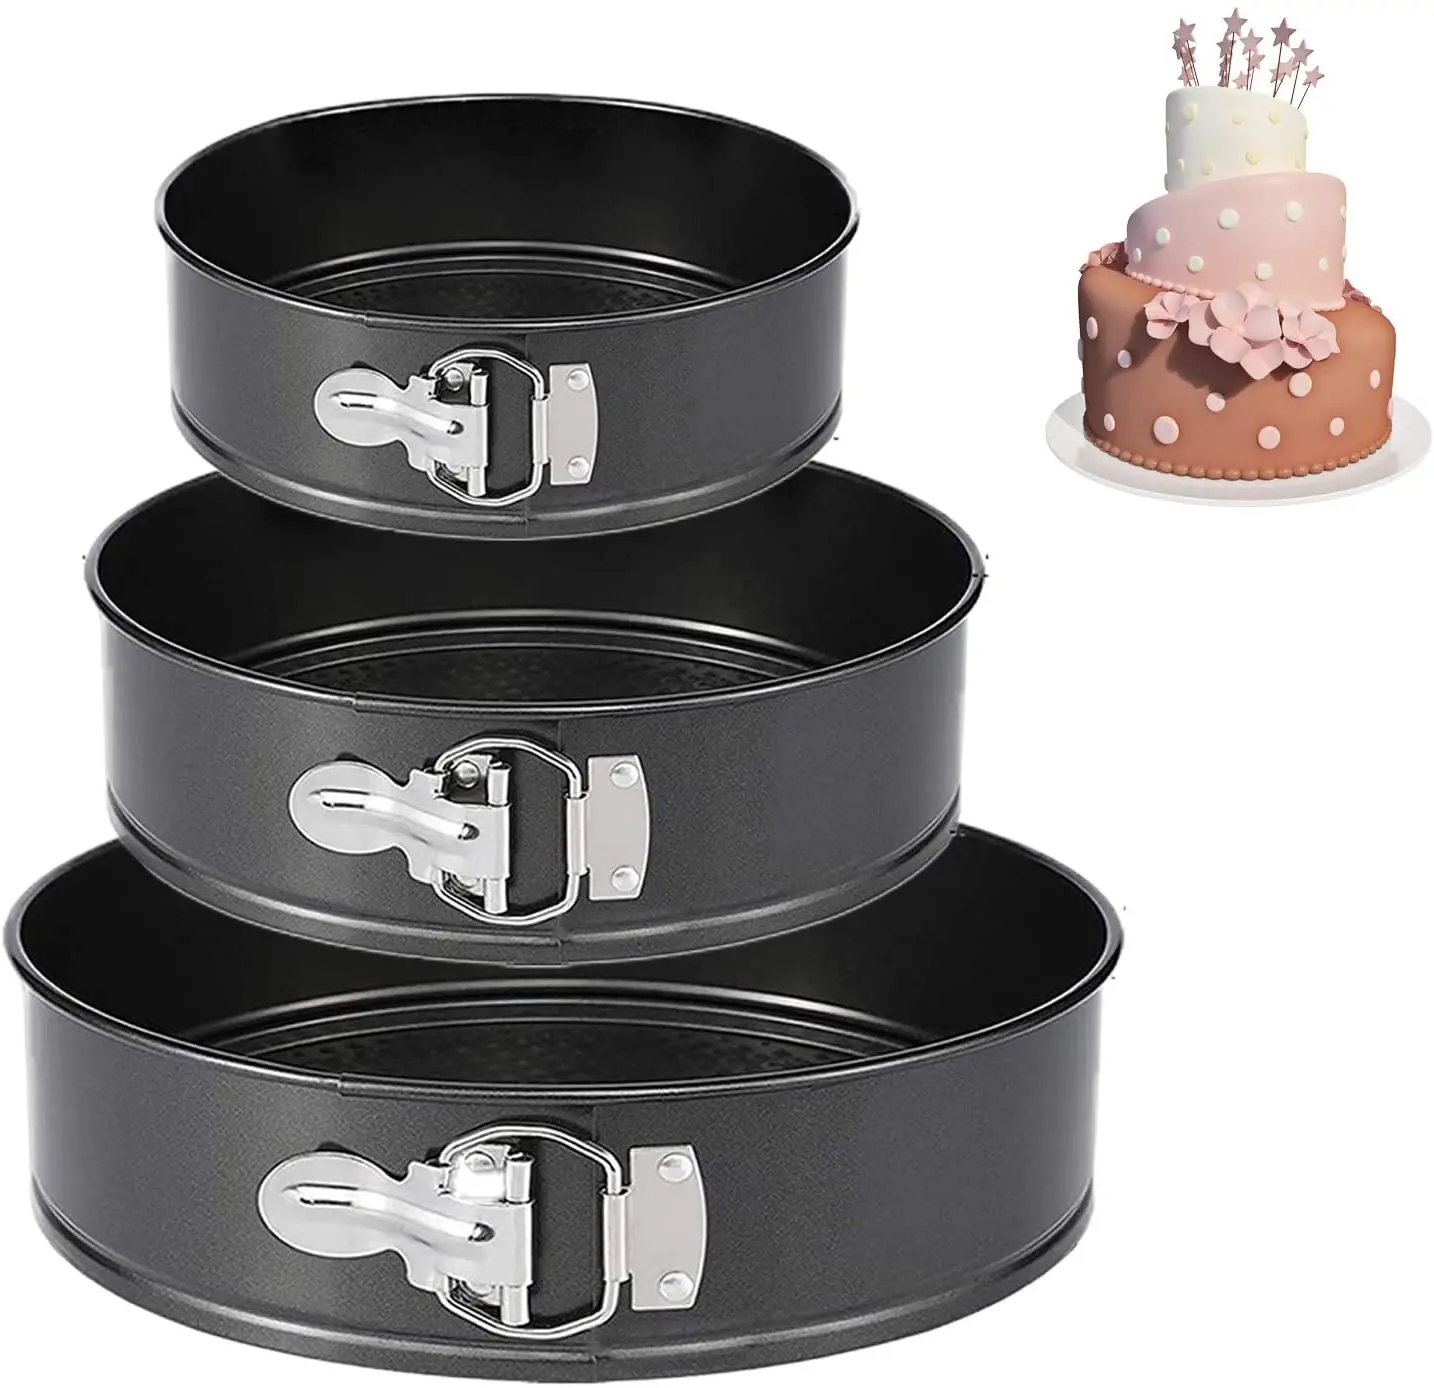 

Springform Pan Cake mold Tin Set of 3 Pcs Round Non-stick Bakeware, Black